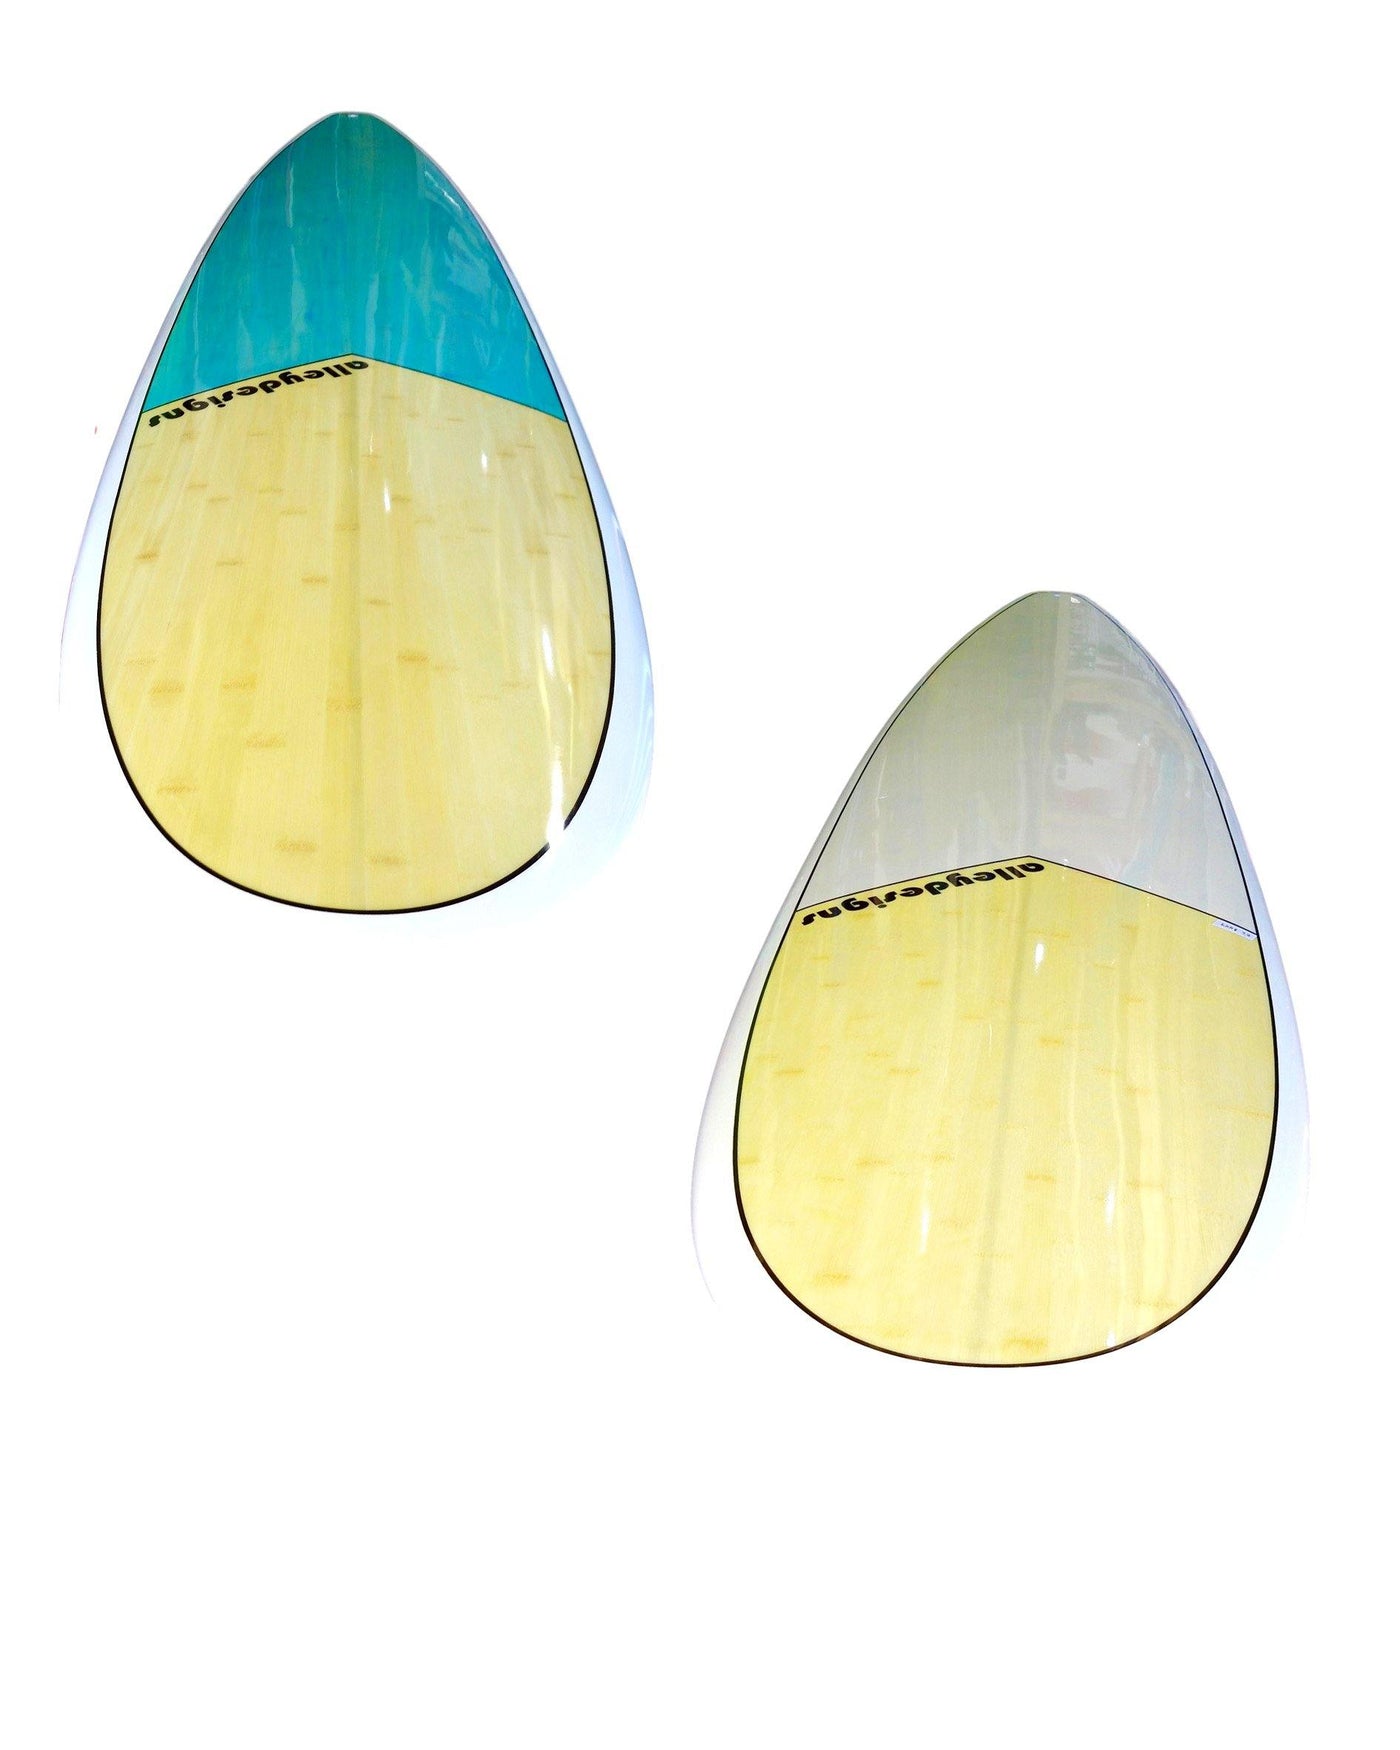 Surfboard 7'6" "The Sunshine Underground" Bamboo Aqua -FREE BAG + LEASH +FINS & WAX WORTH $150 - Alleydesigns  Pty Ltd                                             ABN: 44165571264